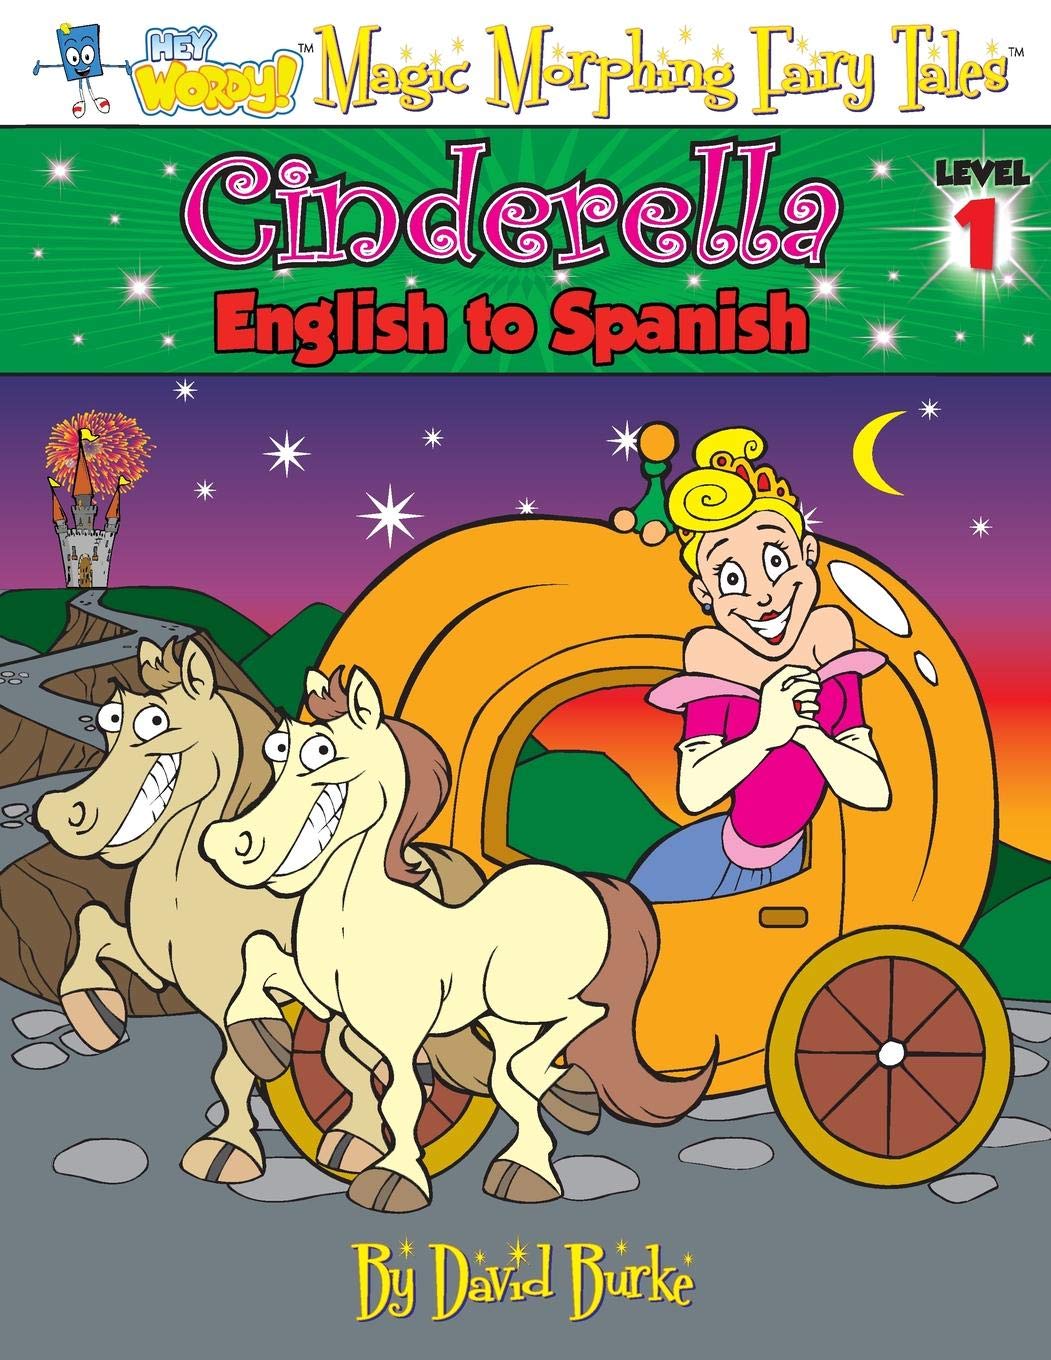 Cinderella: English to Spanish, Level 1 (Hey Wordy Magic Morphing Fairy Tales)